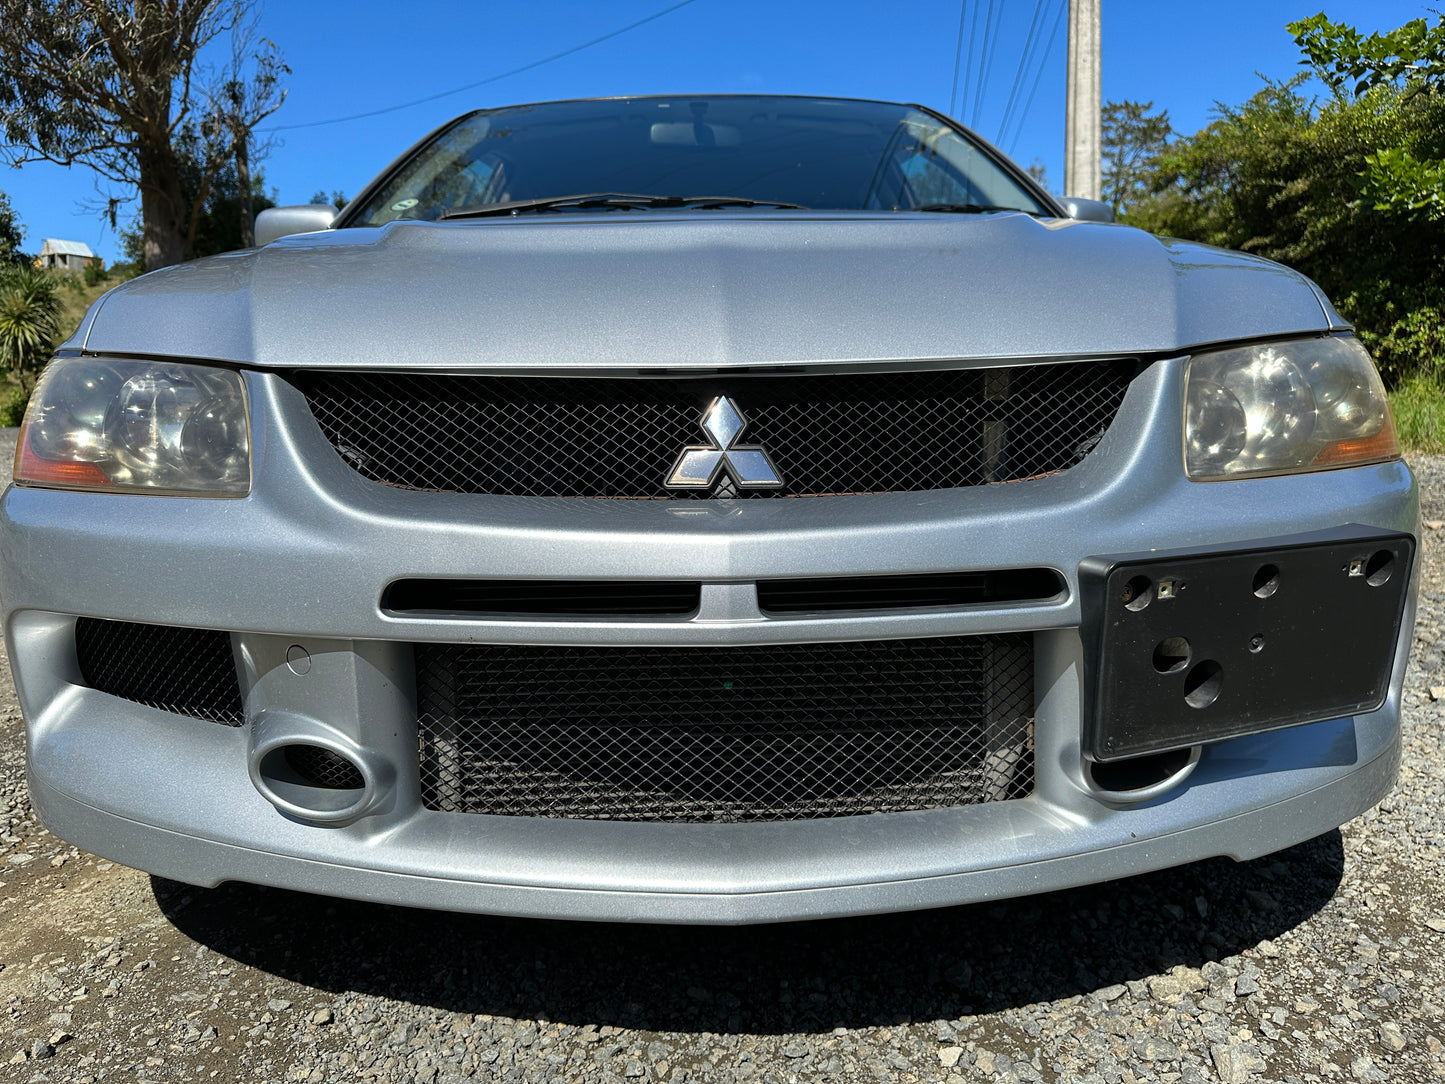 Mitsubishi Lancer Evolution 9 - 2006